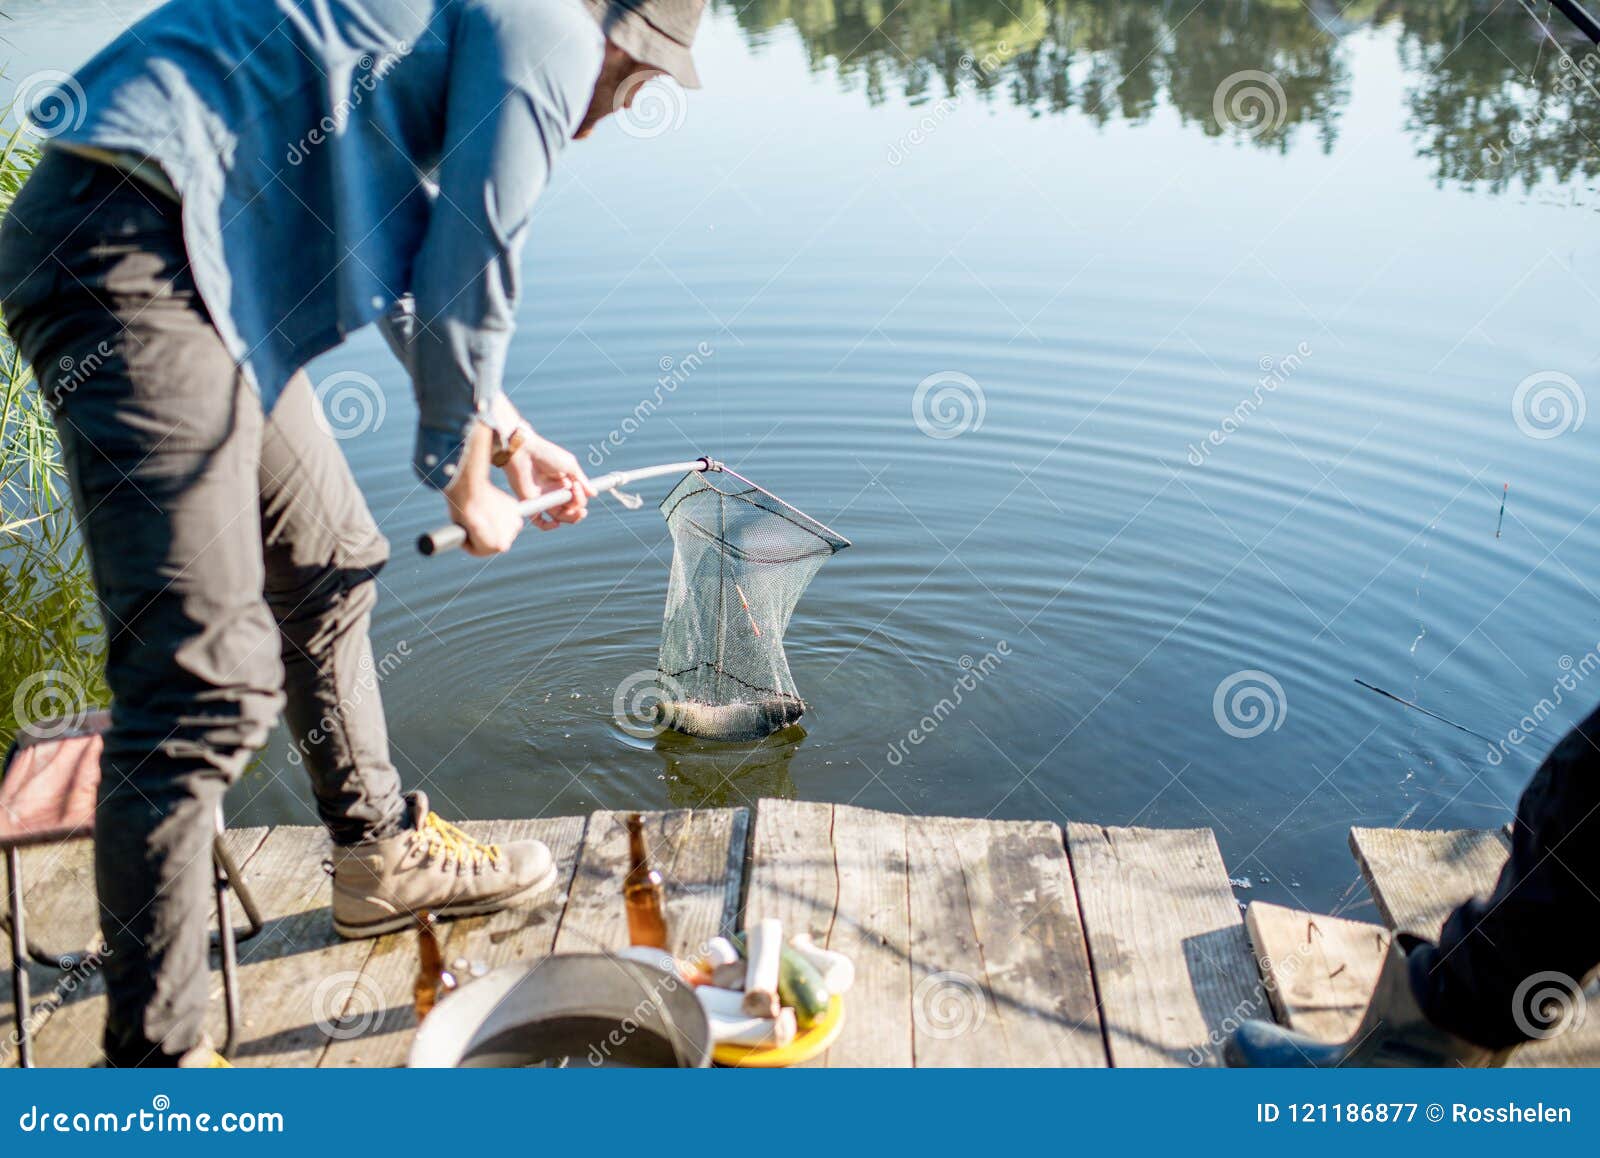 Fisherman catching fish stock image. Image of summer - 121186877